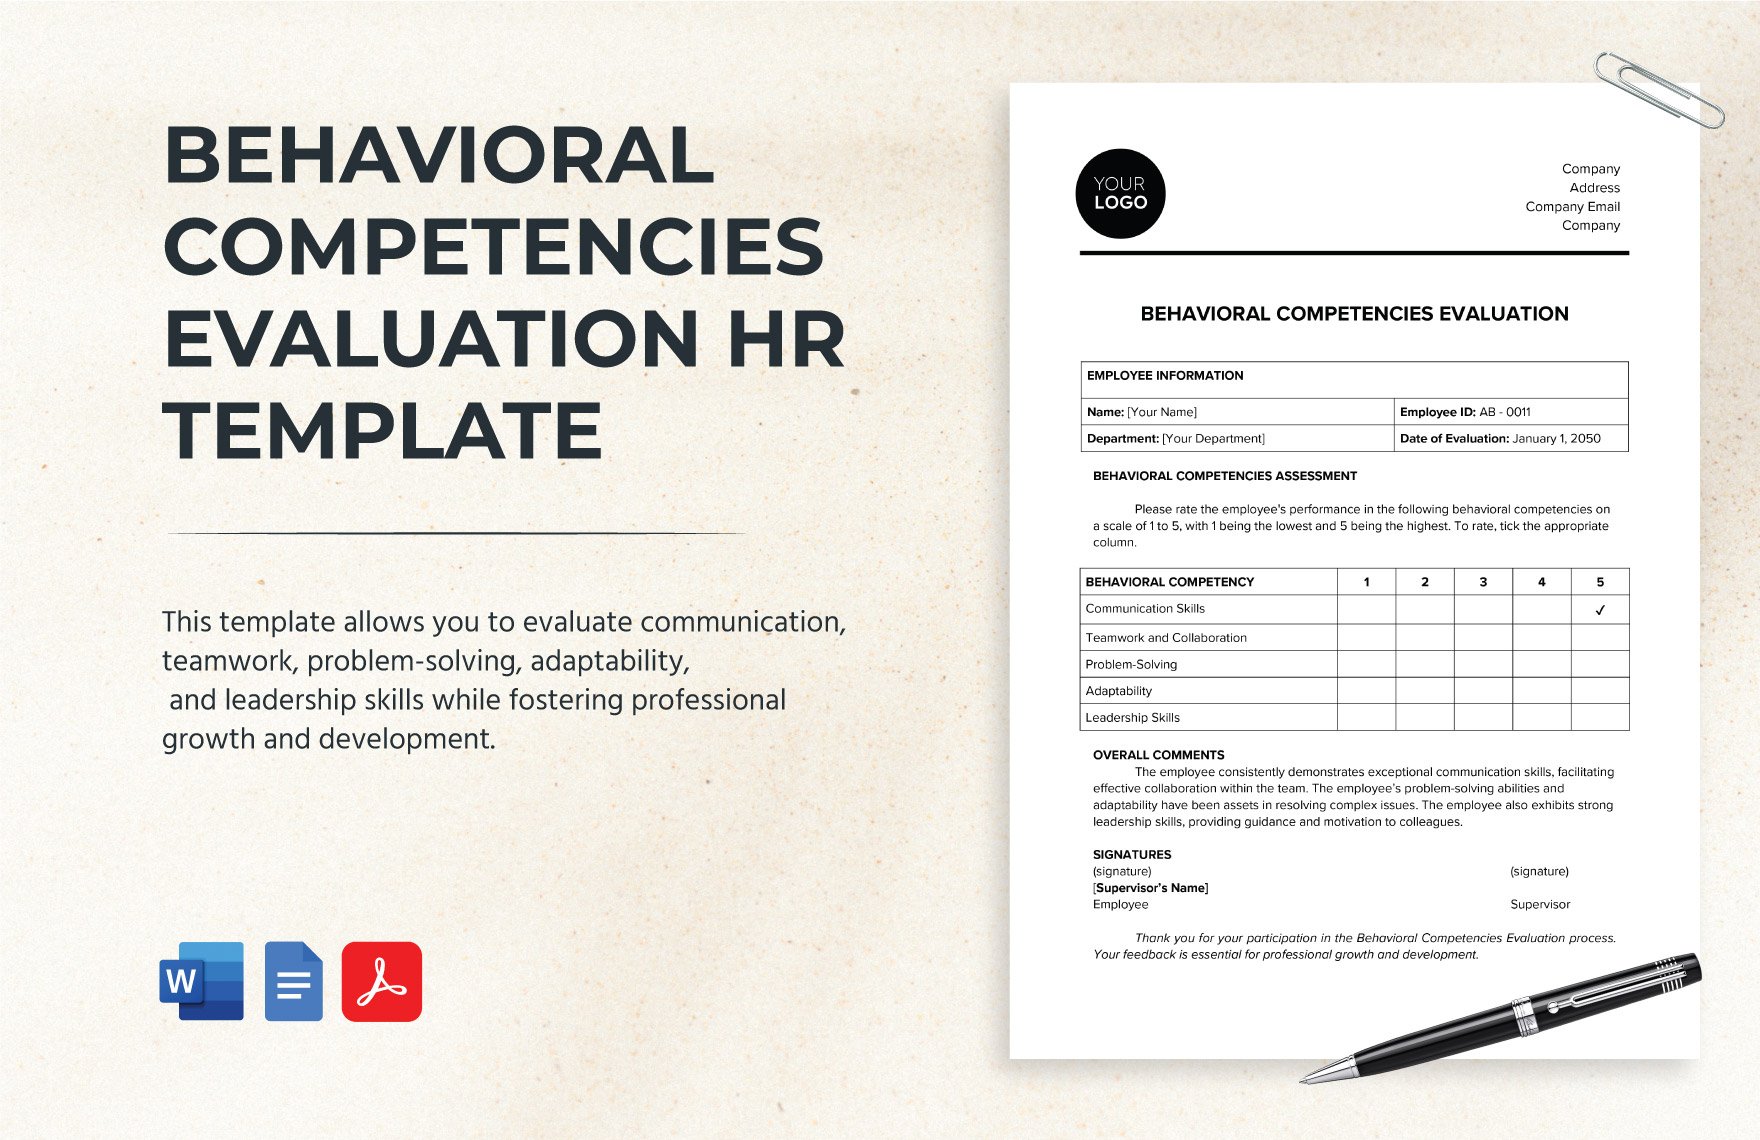 Behavioral Competencies Evaluation HR Template in Word, Google Docs, PDF